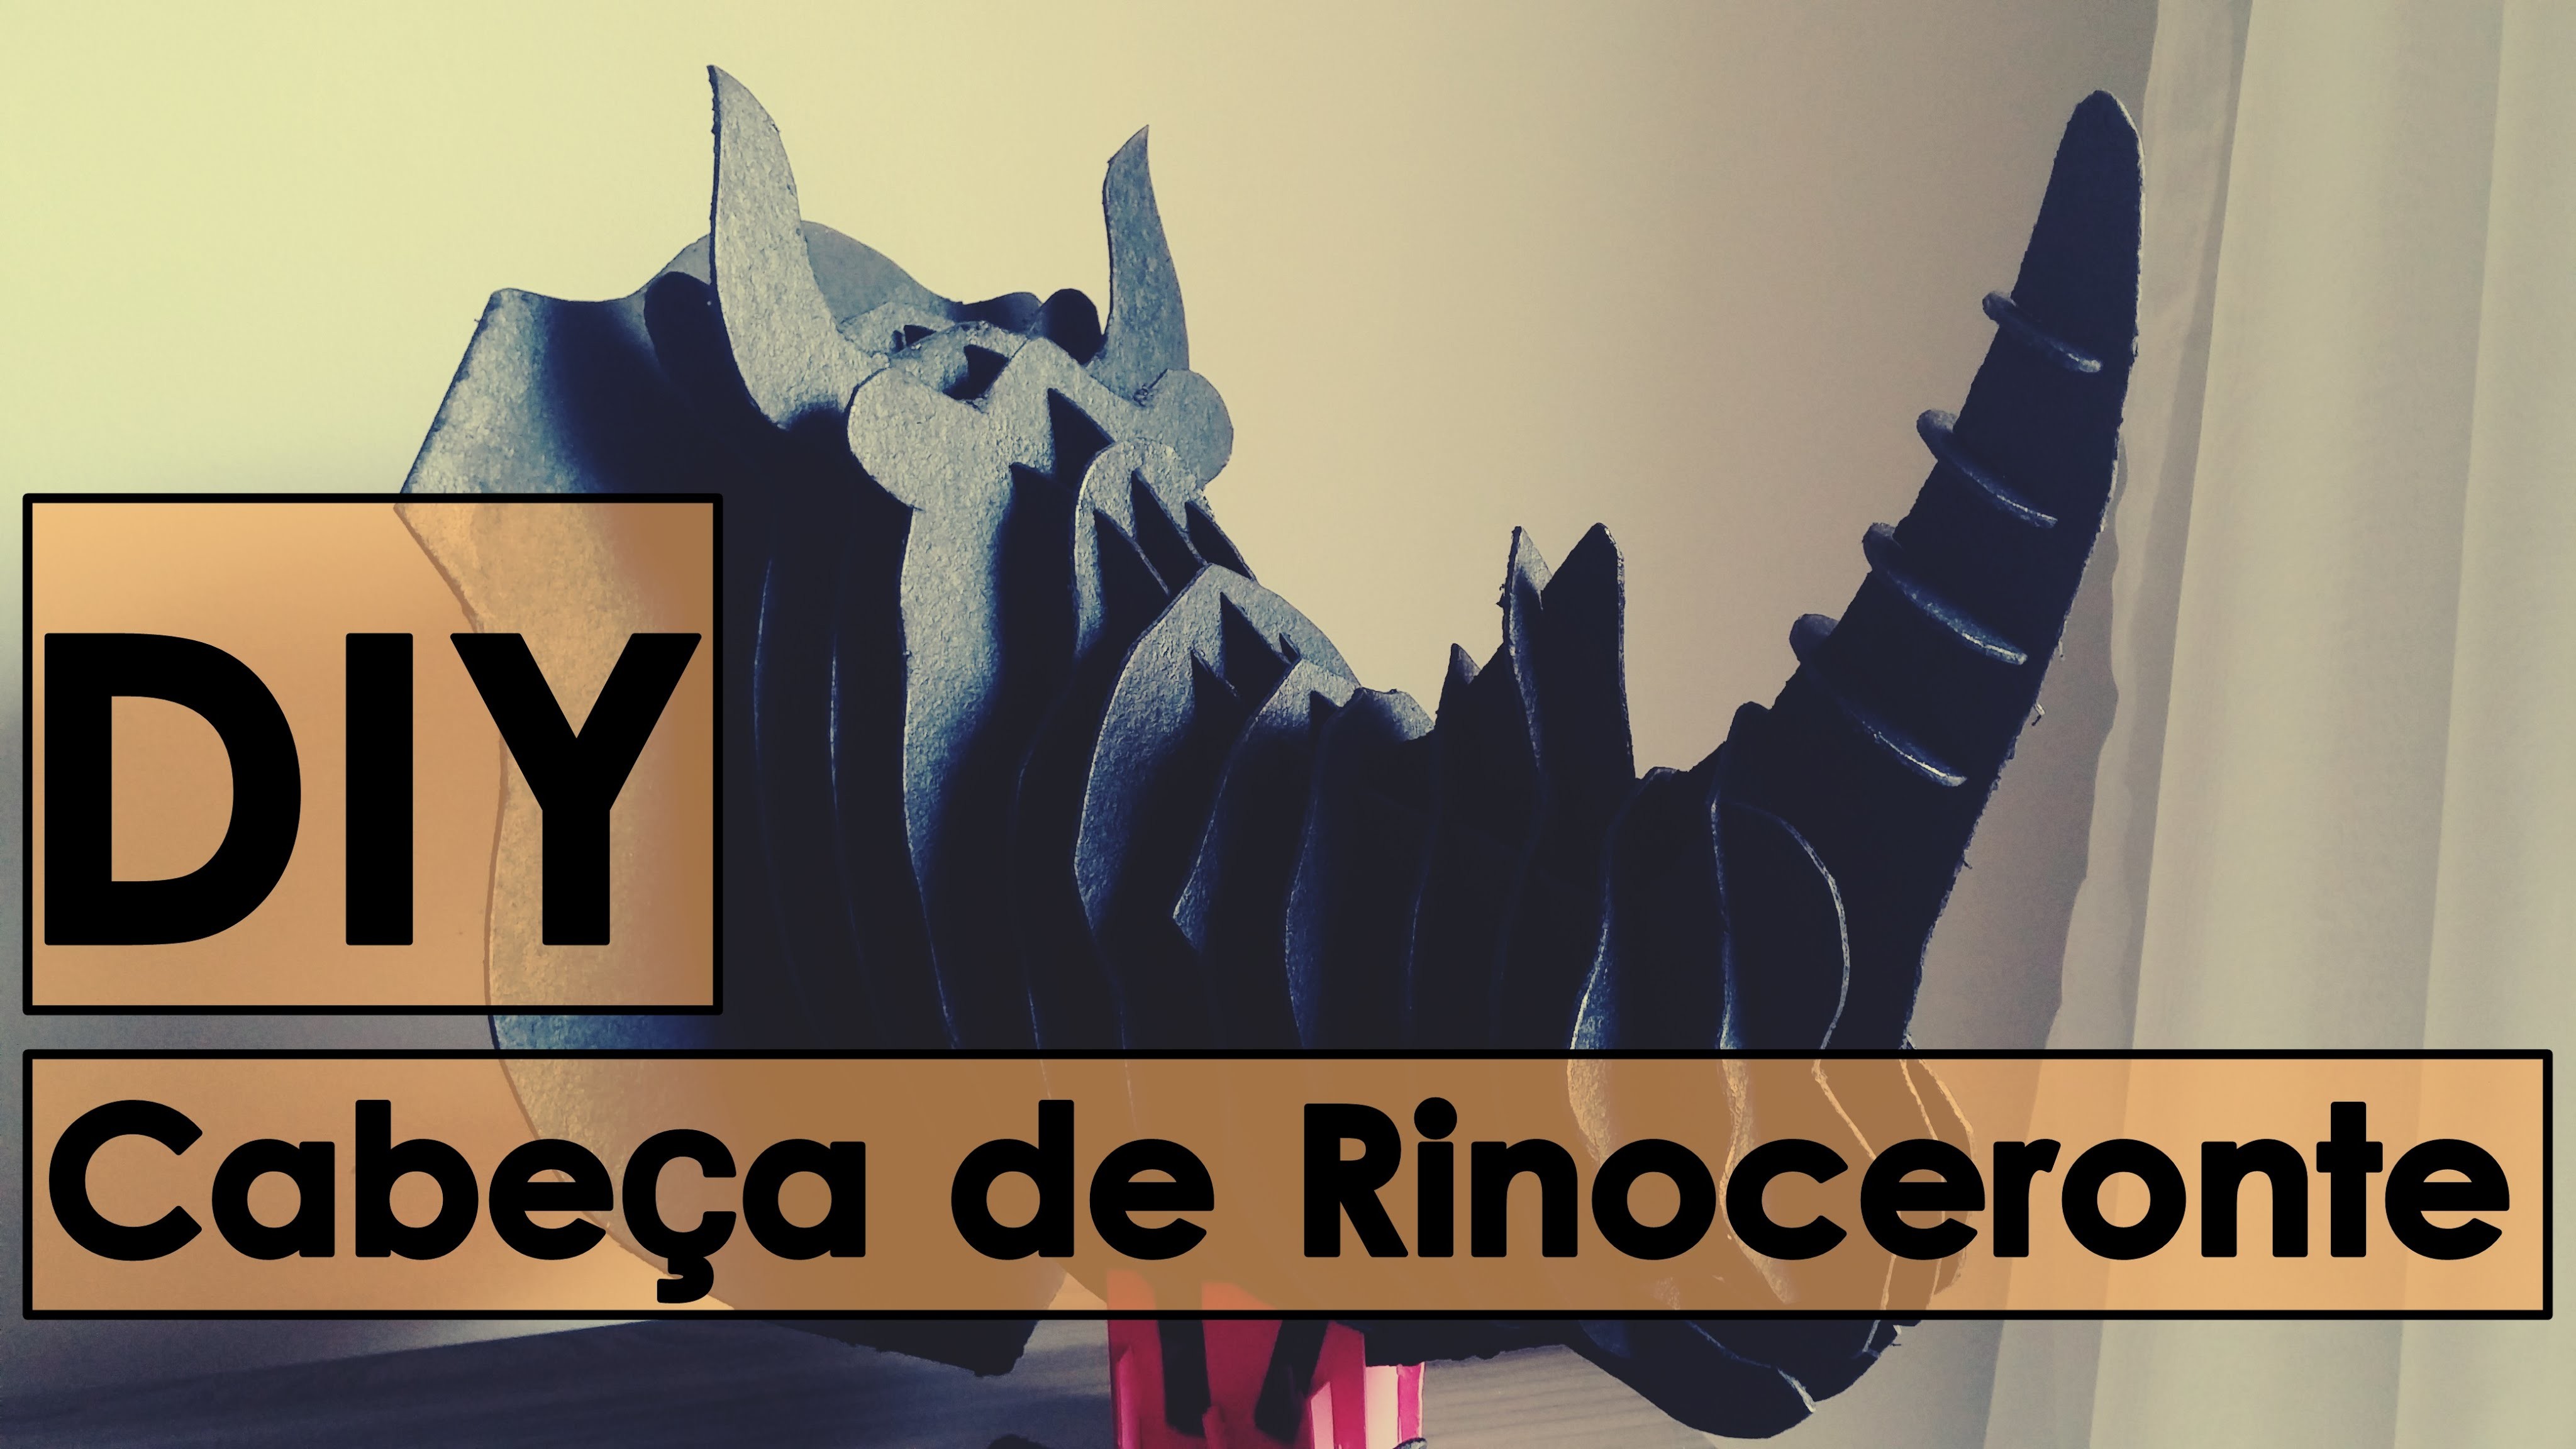 DIY - Cabeça de Rinoceronte